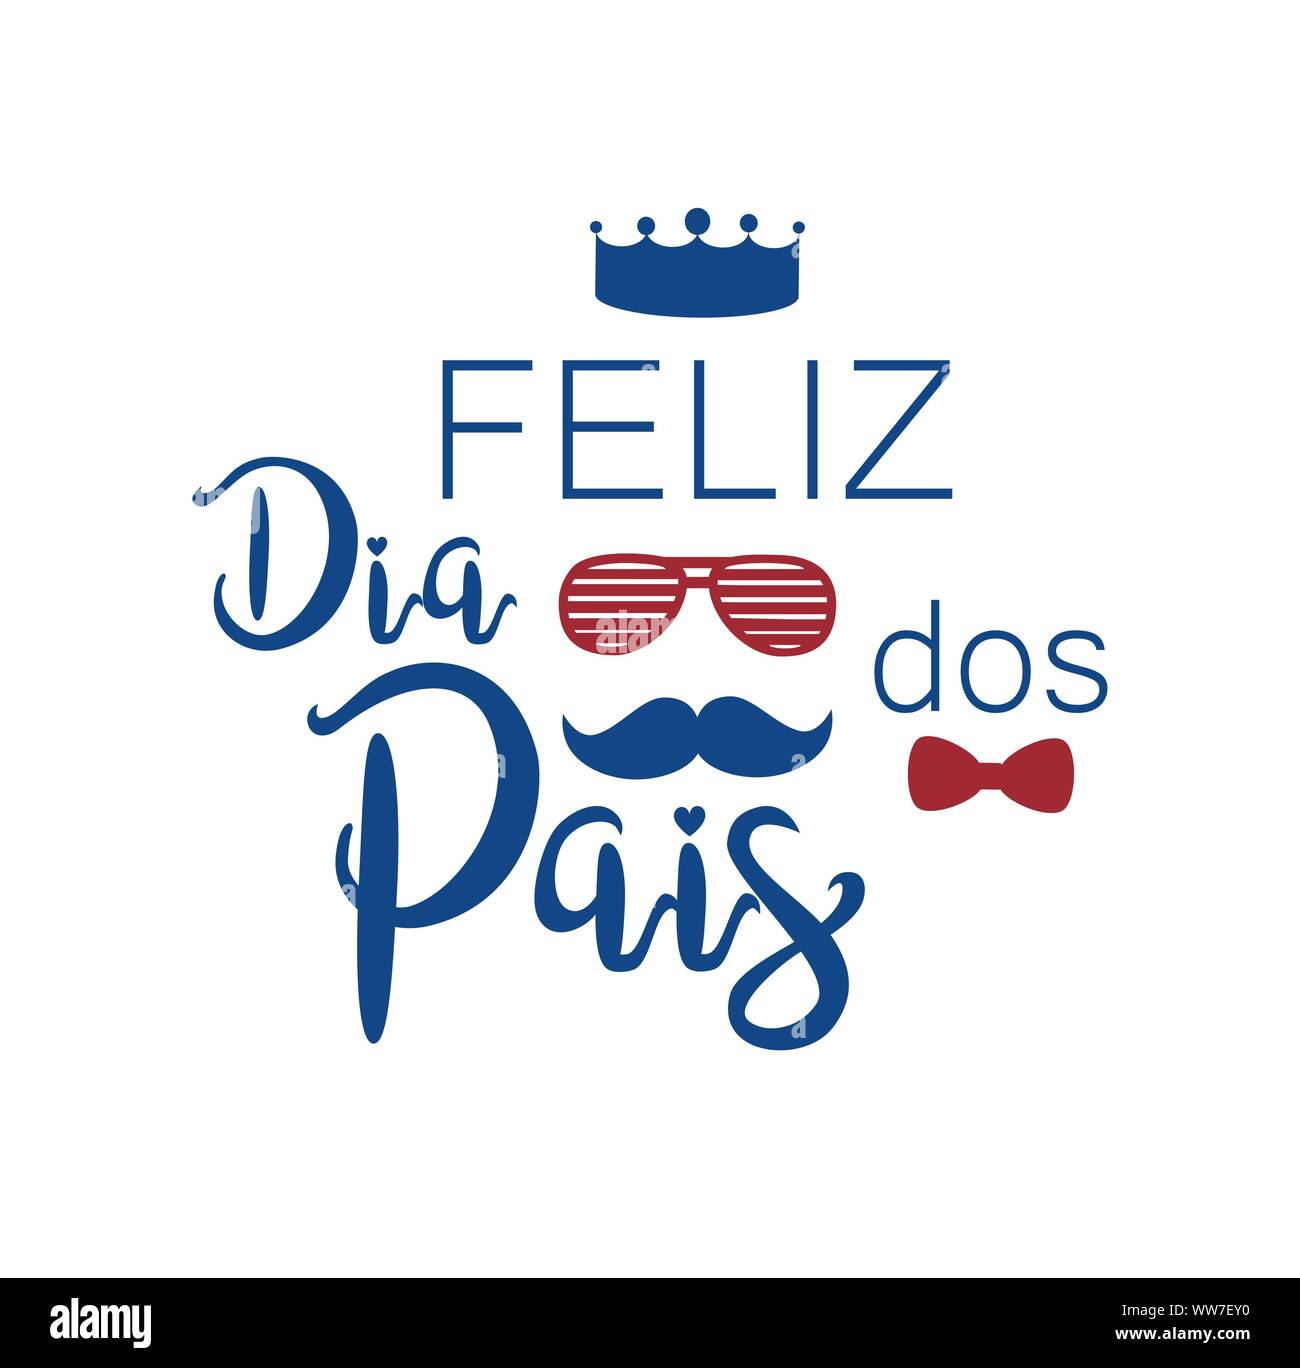 Feliz dia dos pais is happy father's day in portuguese. Text design vector  Stock Vector Image & Art - Alamy